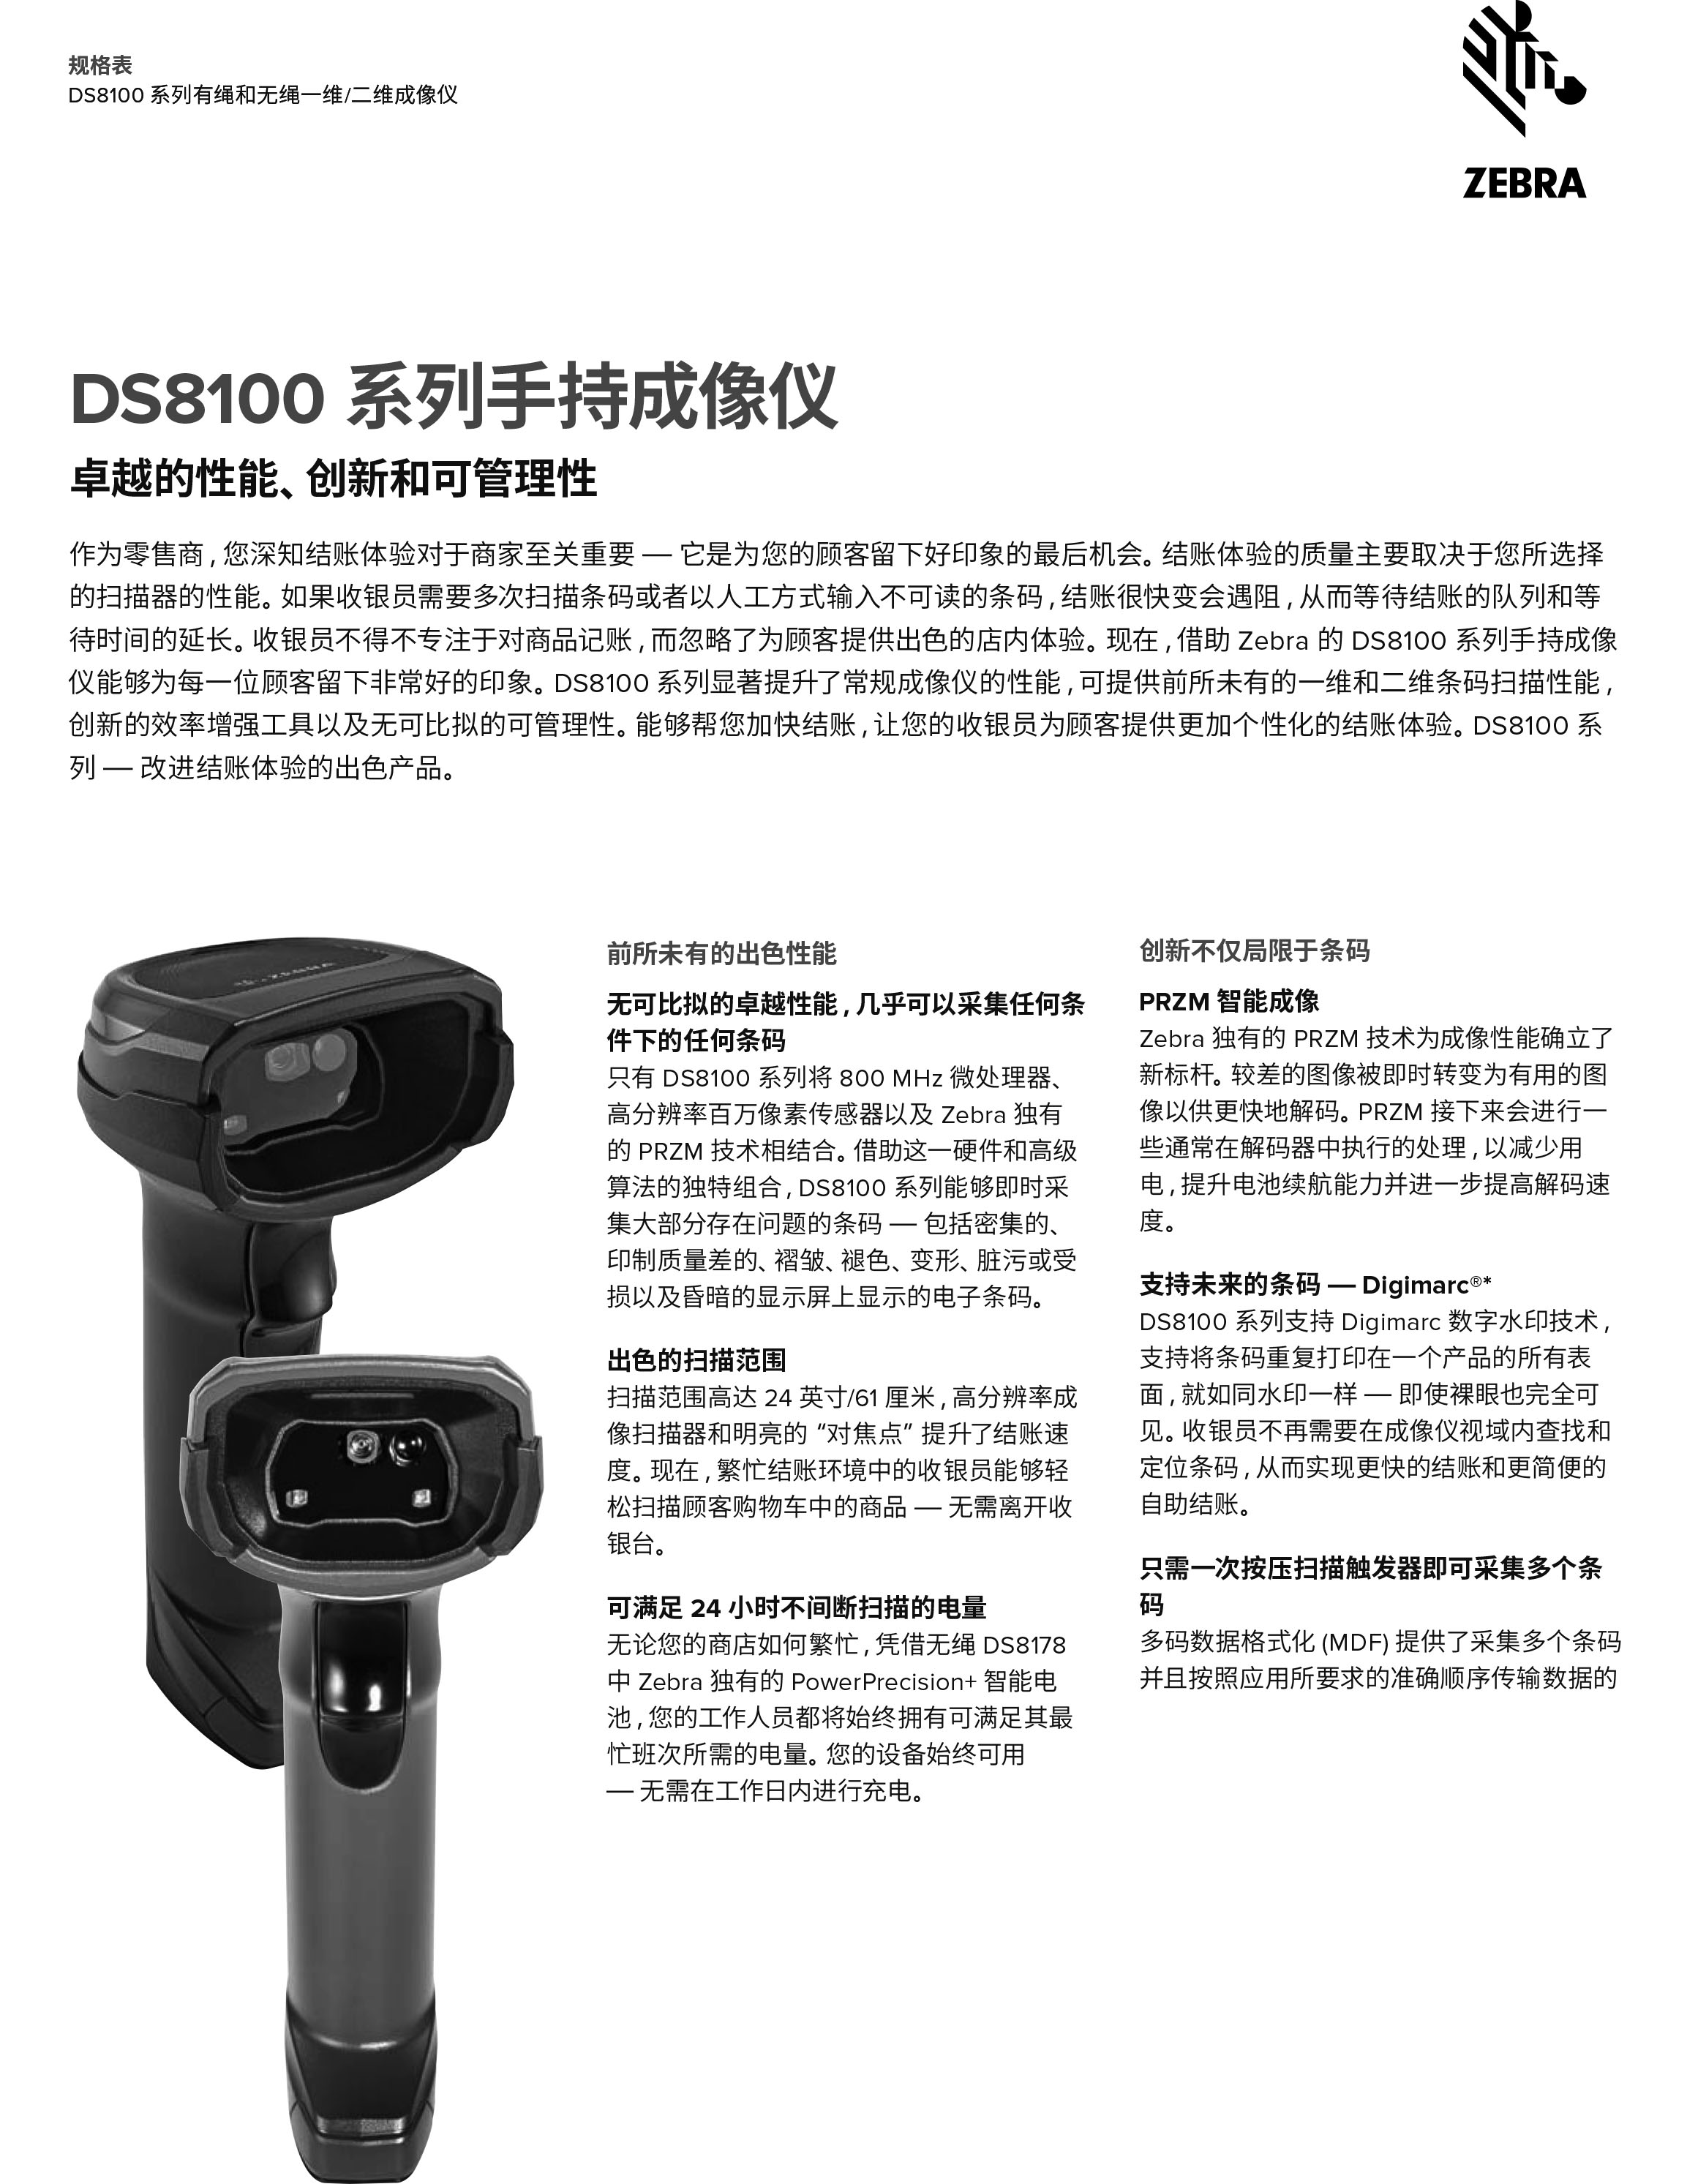 DS8100series-datasheet-zh-cn(1)-2.jpg